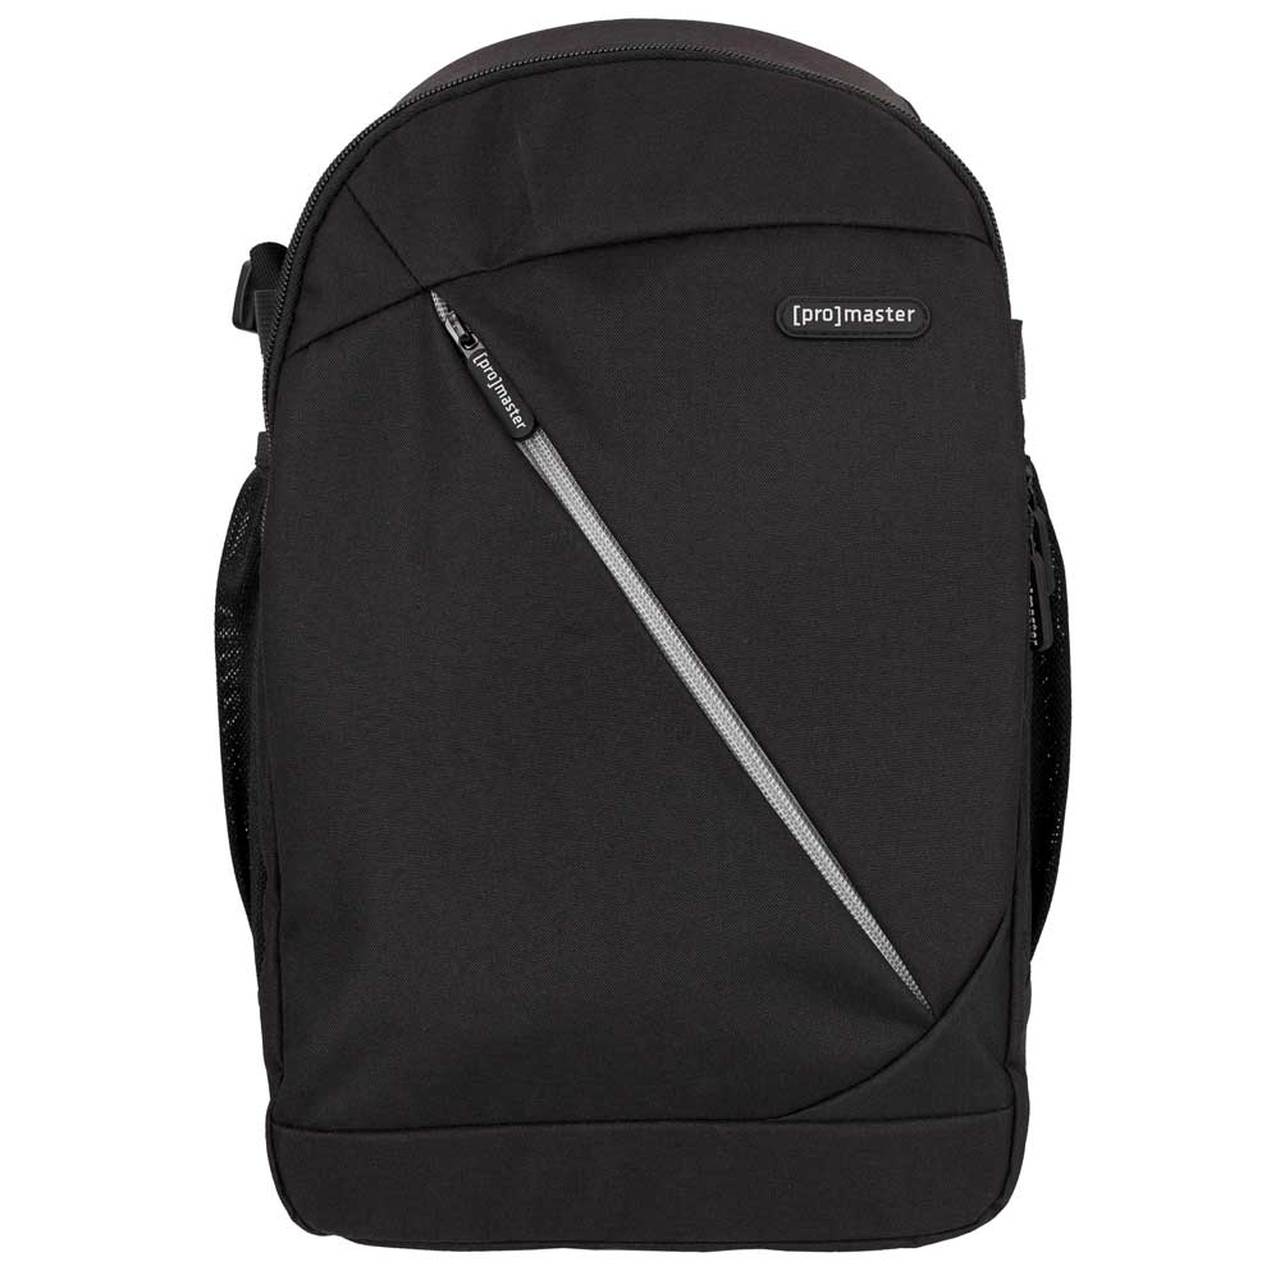 Promaster 7335 Impulse Backpack Small  - Black